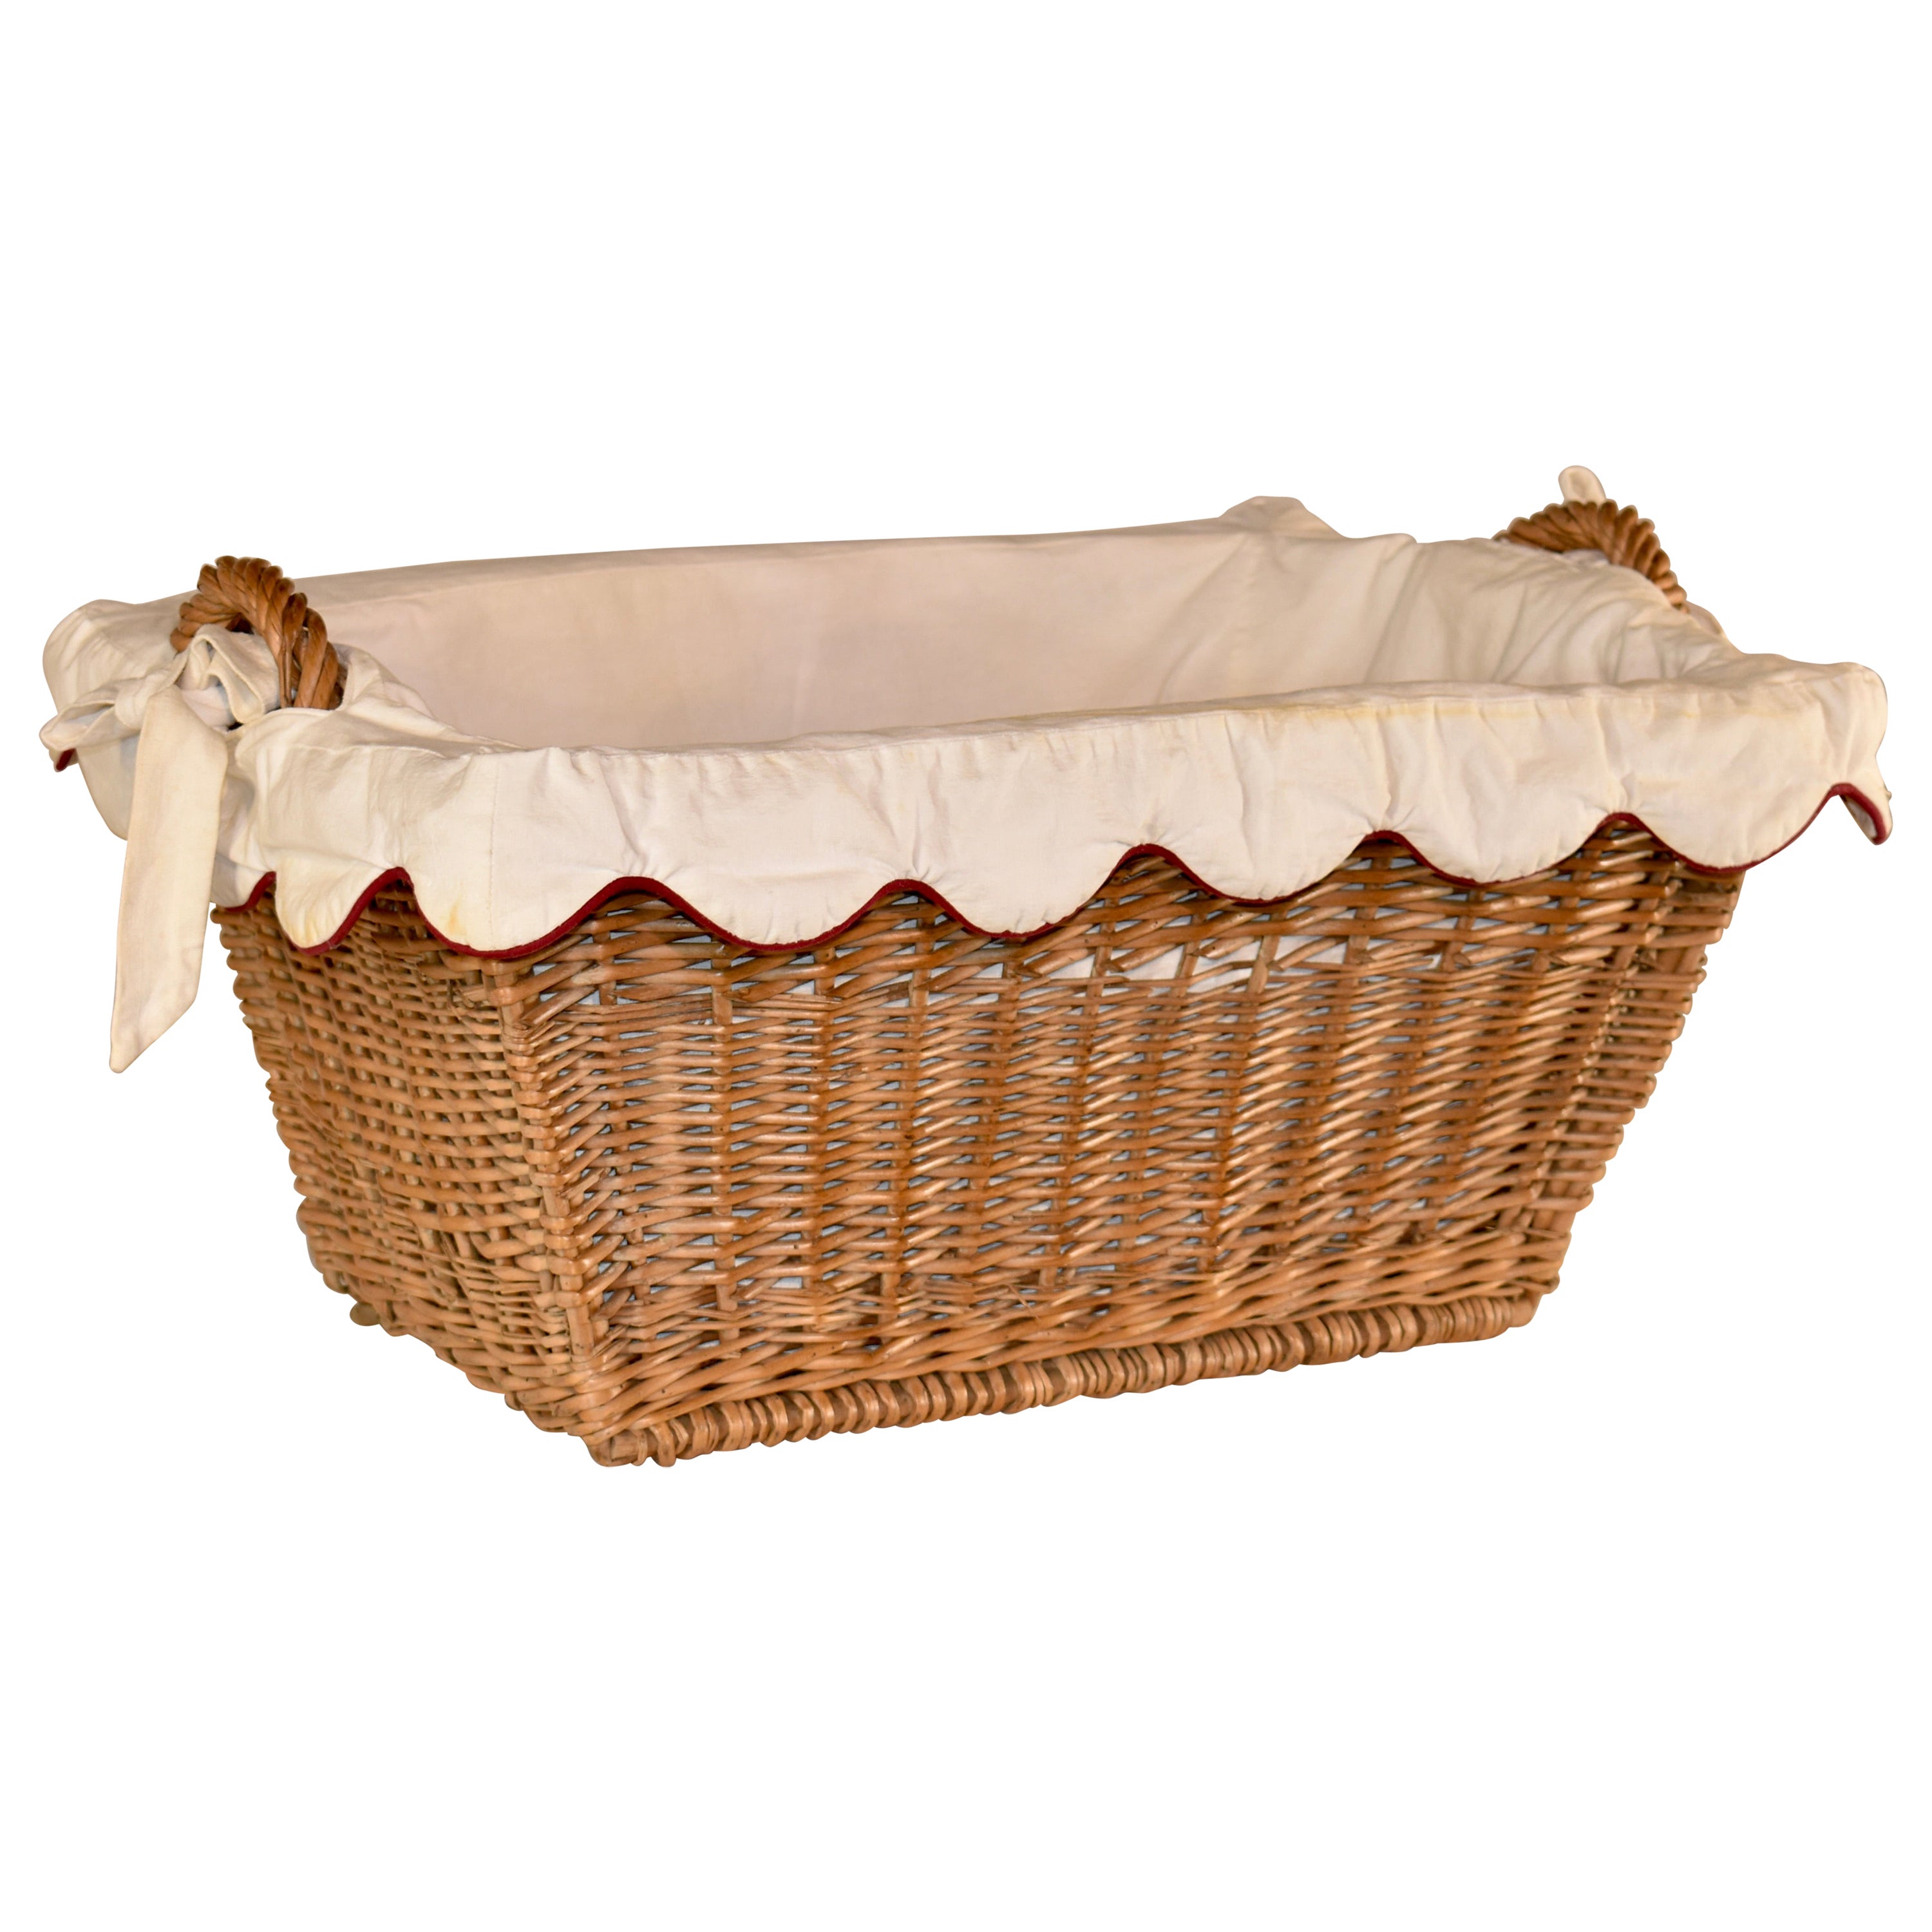 Circa 1920 French Laundry Basket